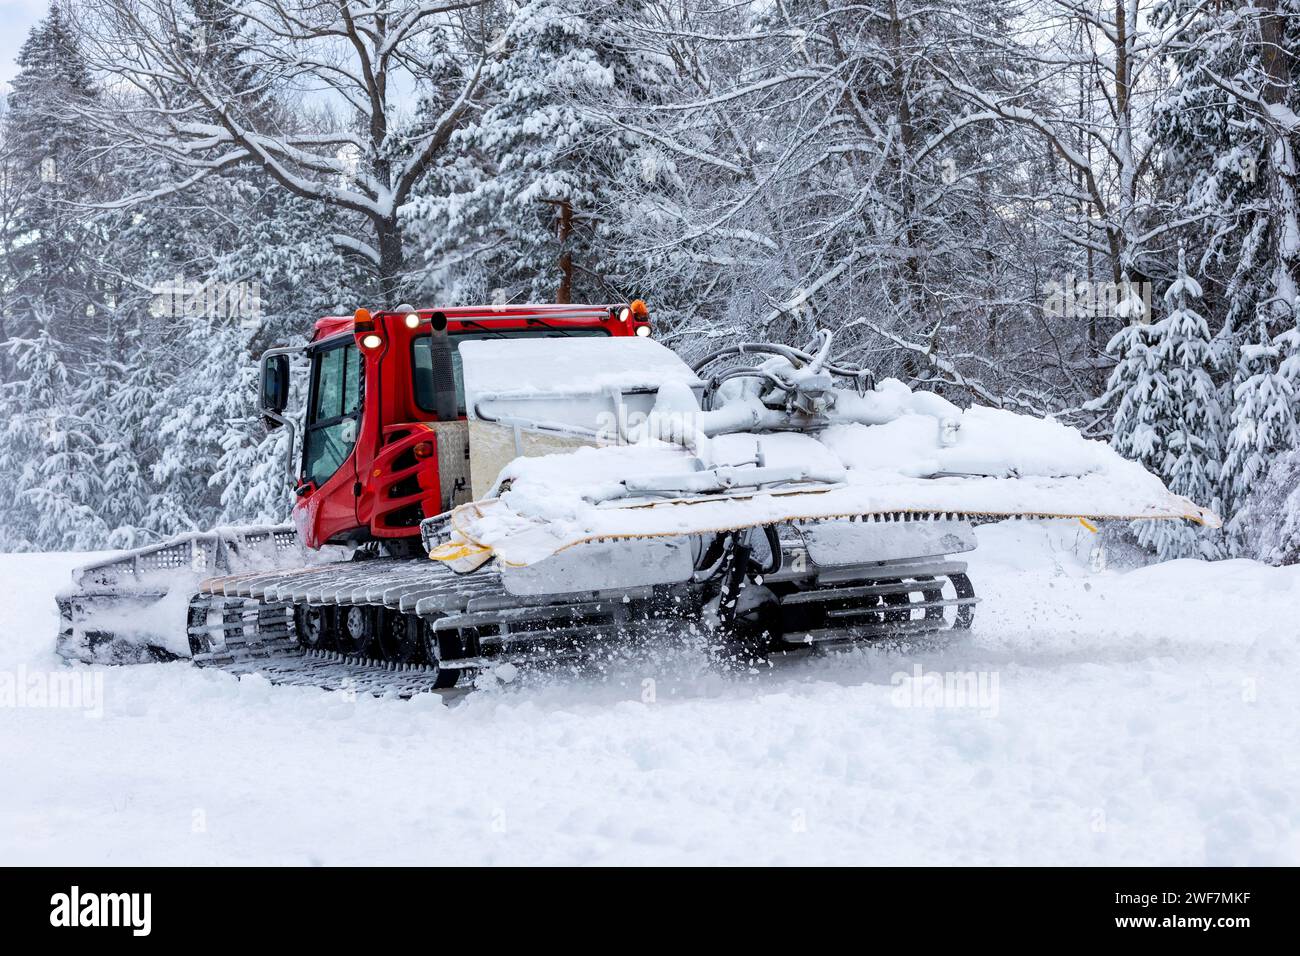 Snow groomer snowcat ratrack machine preparing ski slope for alpine skiing, winter resort Bansko, Bulgaria Stock Photo